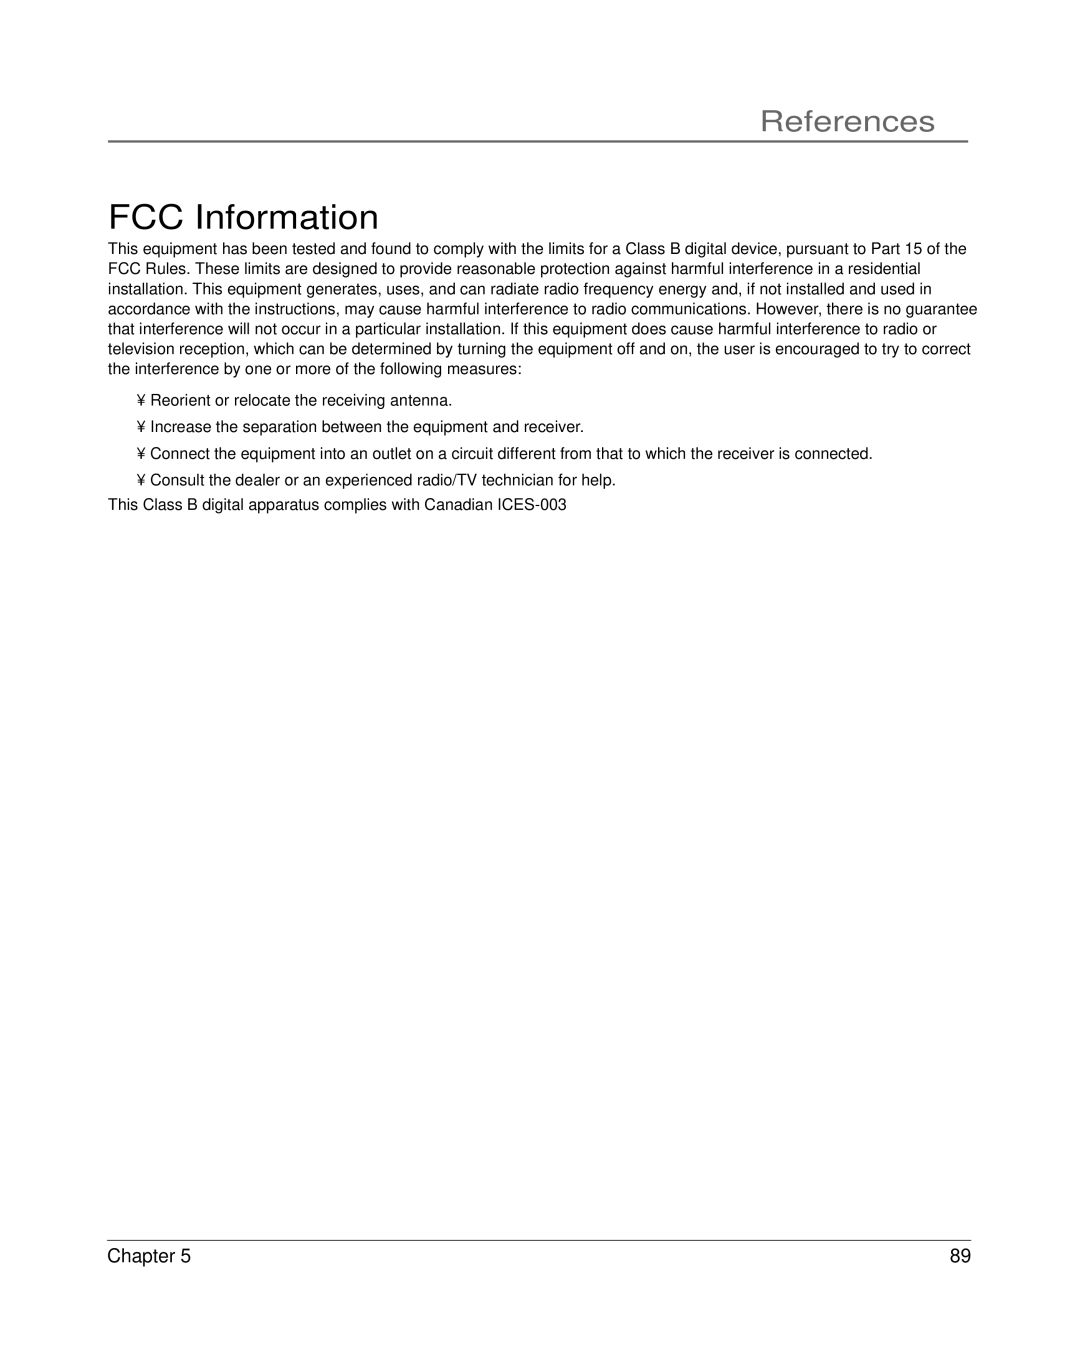 RCA HDLP61 manual FCC Information 